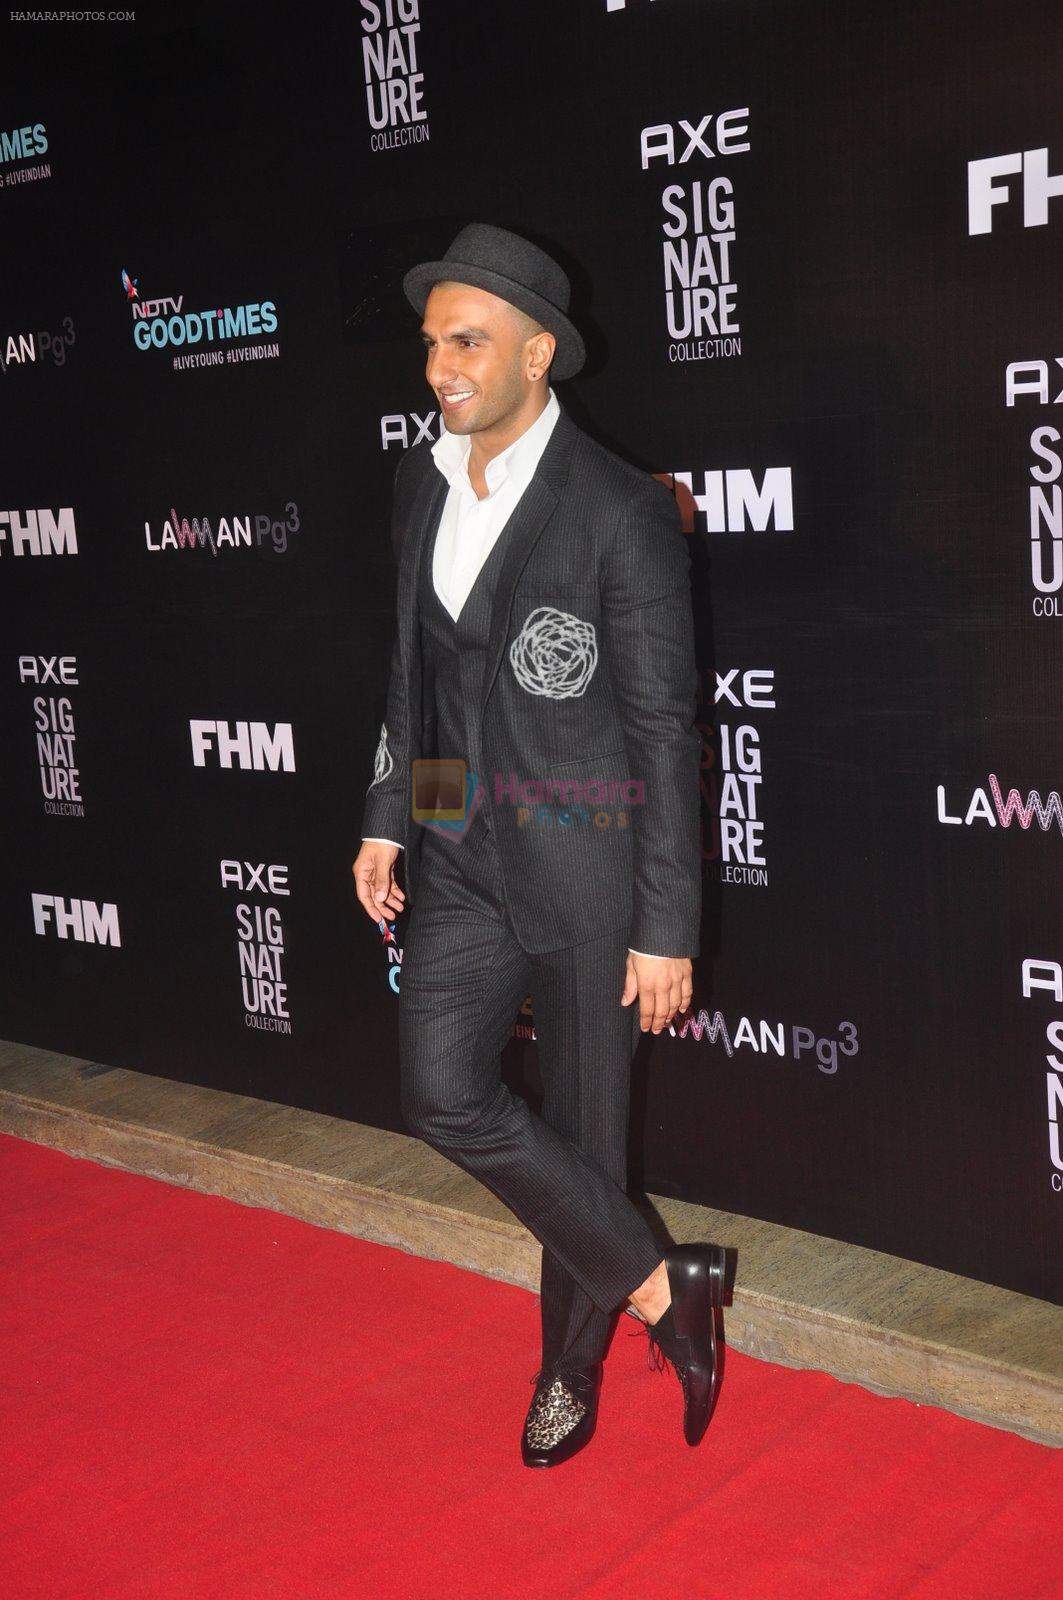 Ranveer Singh at Fhm bachelor of the year bash in Hard Rock Cafe on 22nd Dec 2014